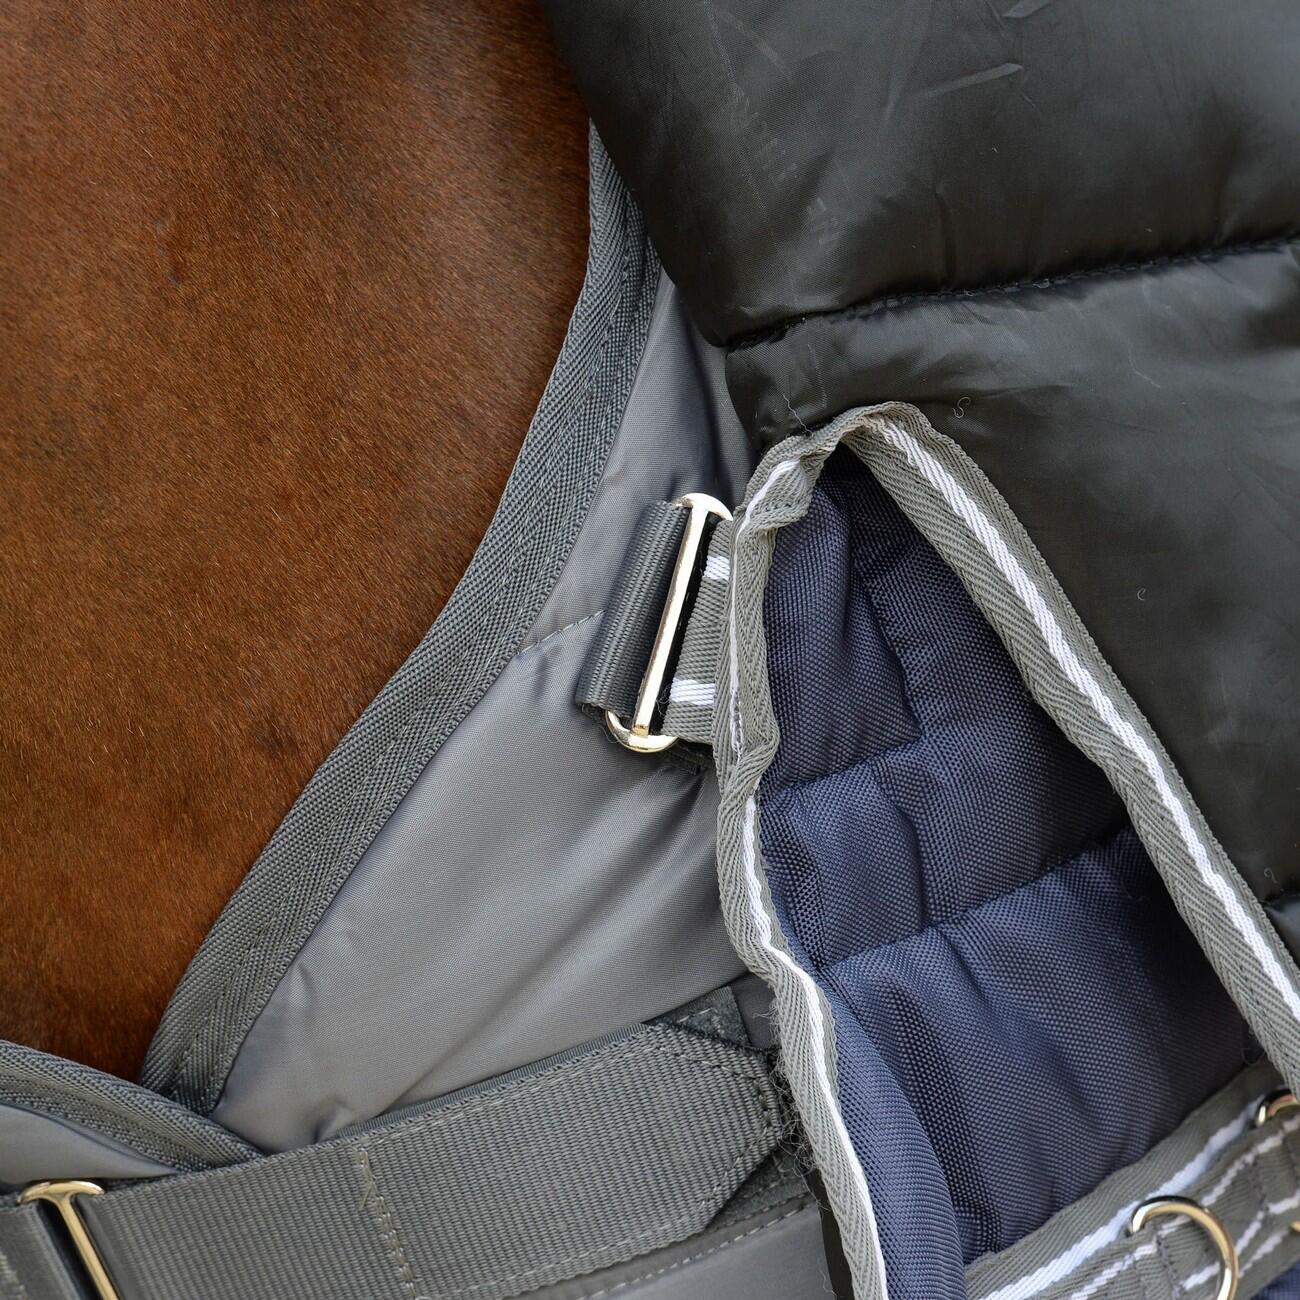 Comfitec Midweight Horse Under Rug (Grey) 3/4